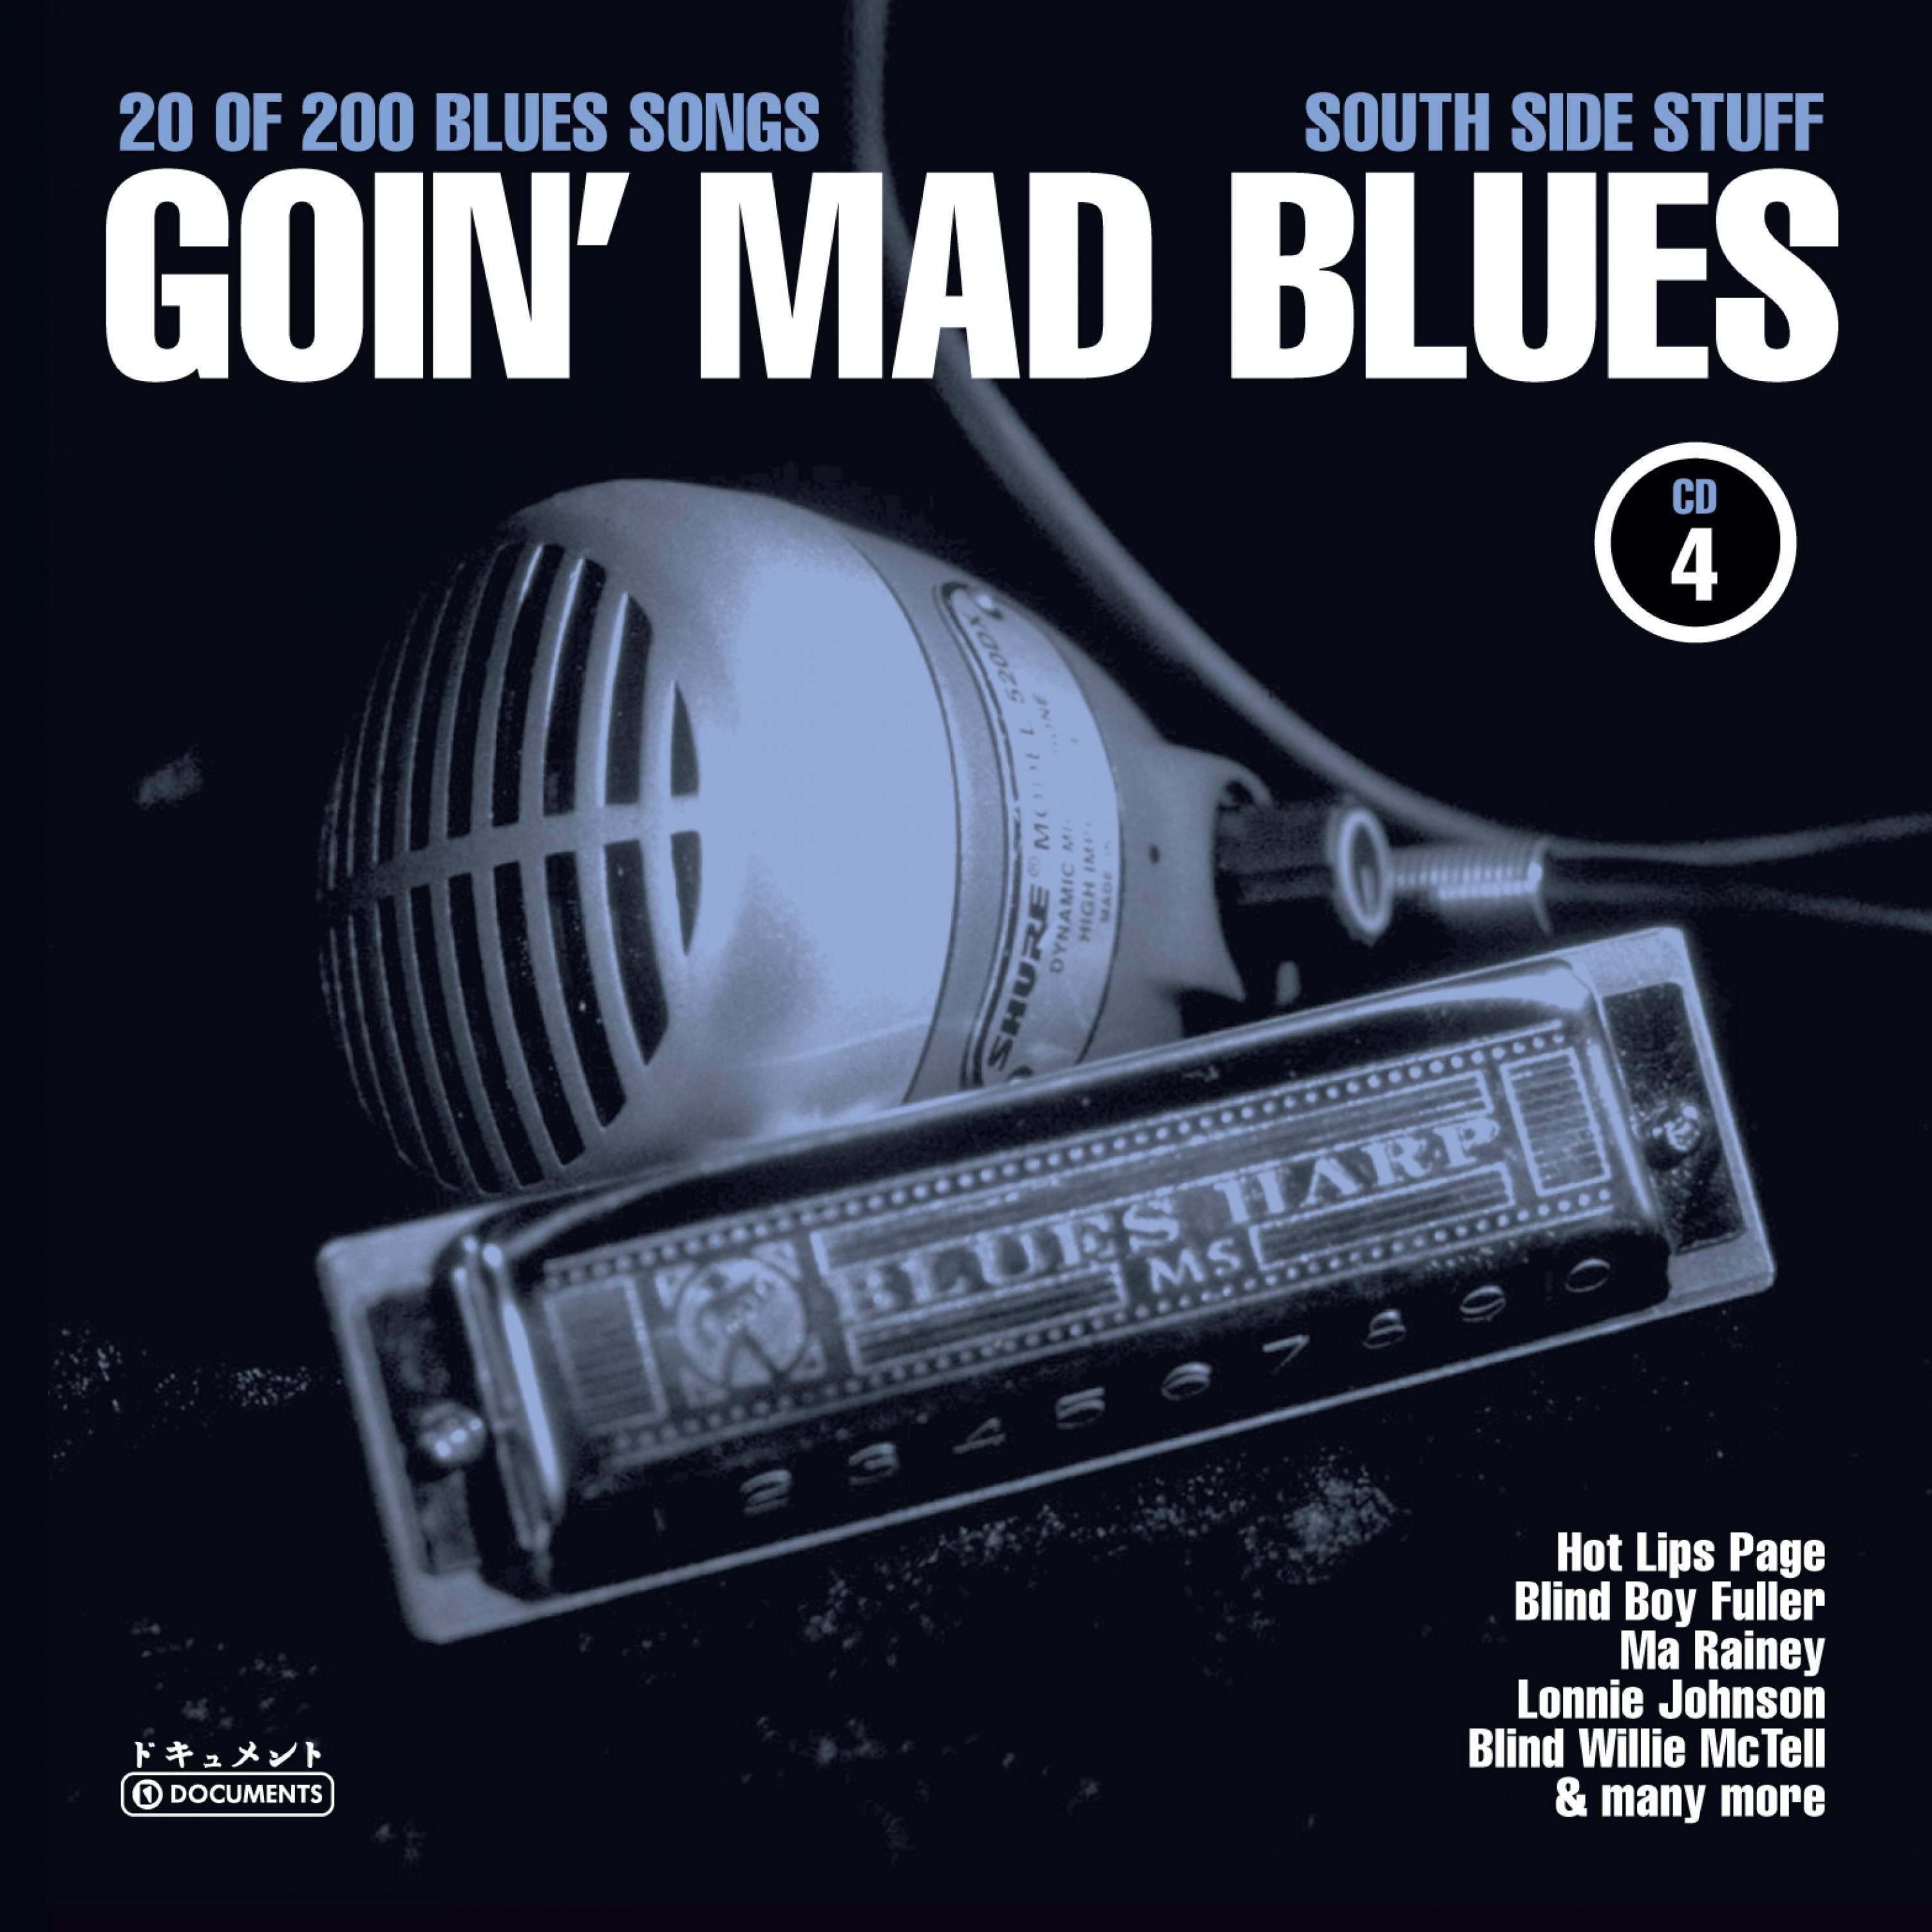 Goin' Mad Blues Vol. 4